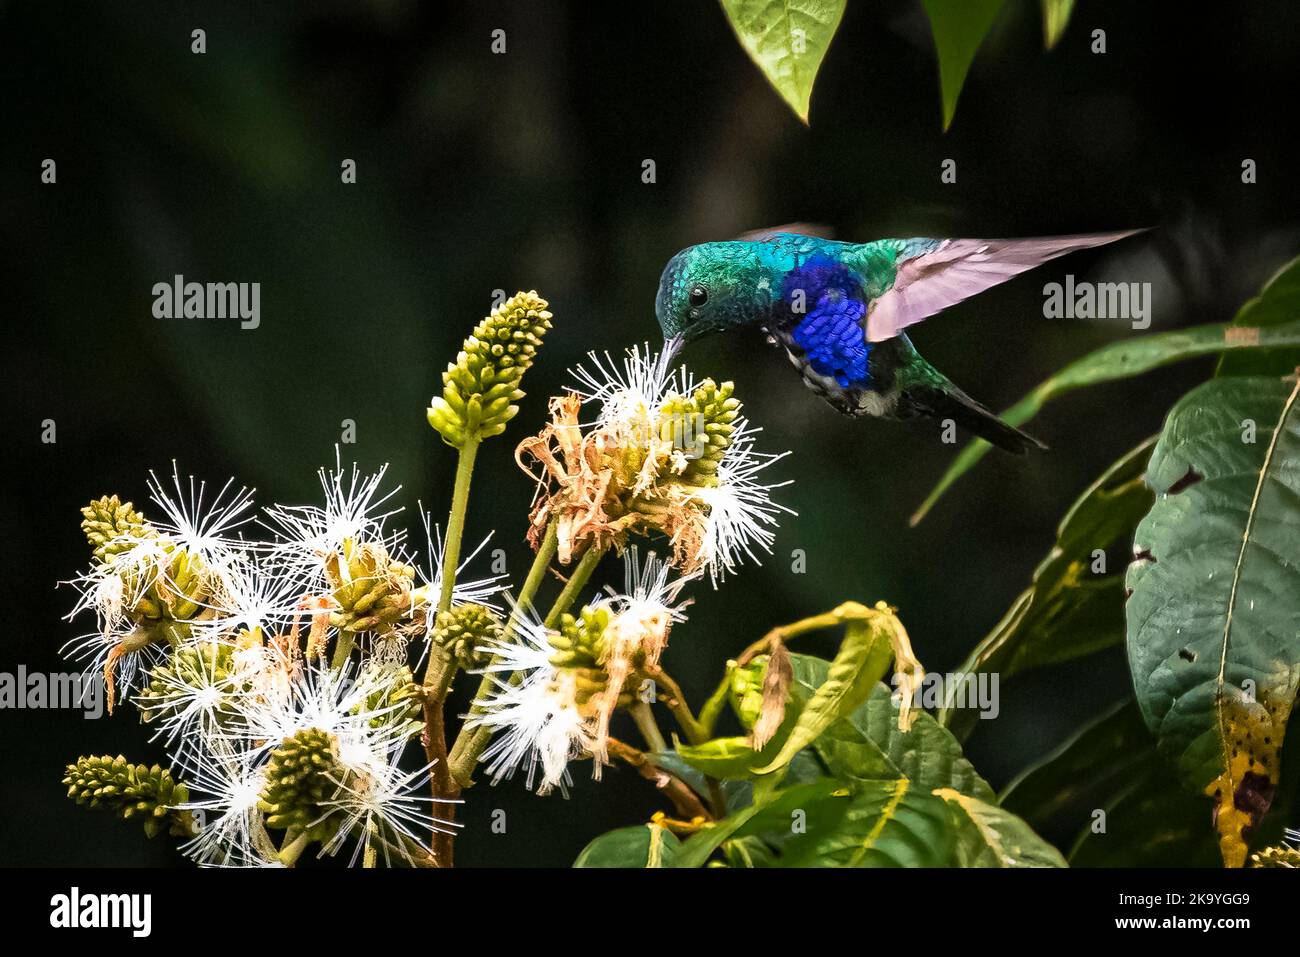 Violet-bellied hummingbird in flight feeding on a tree image taken in Panama Stock Photo